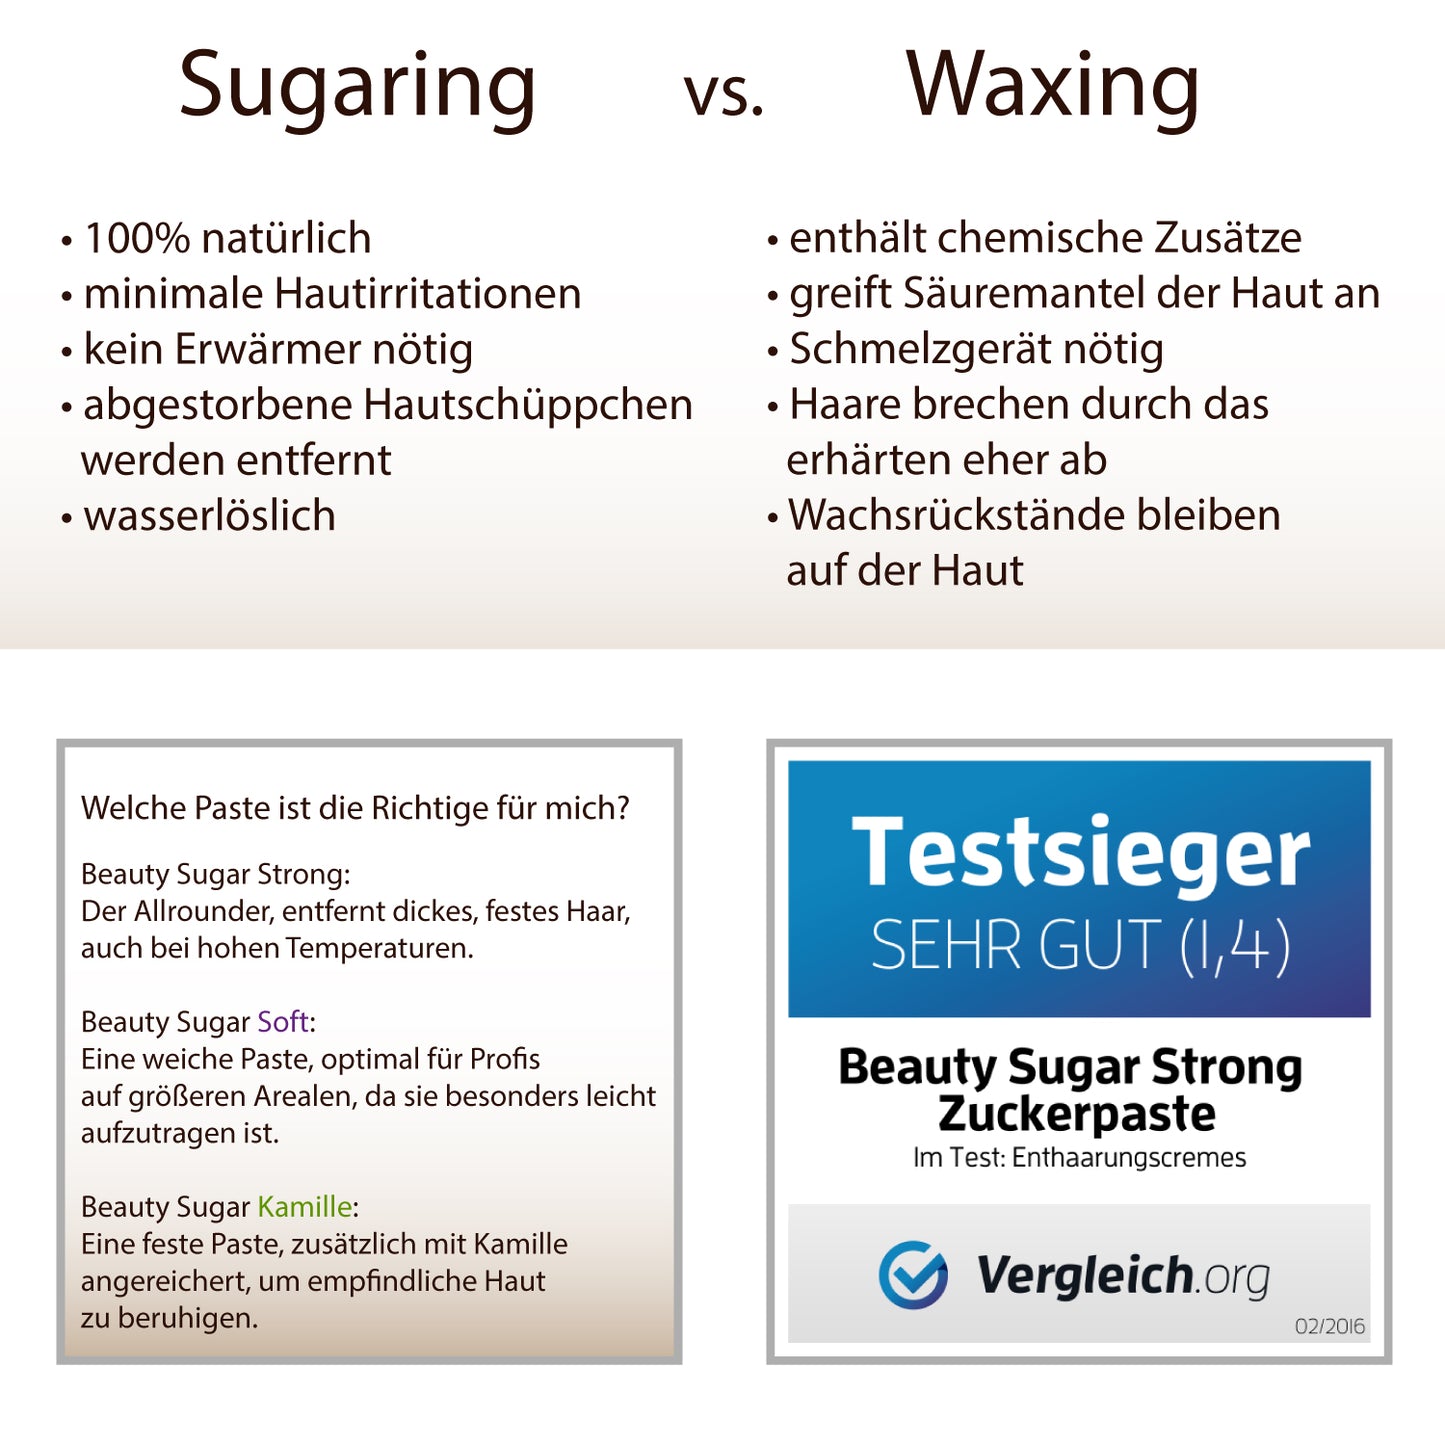 Beauty Sugar soft - Inhalt 600g - Made in Germany UPC 608938884145